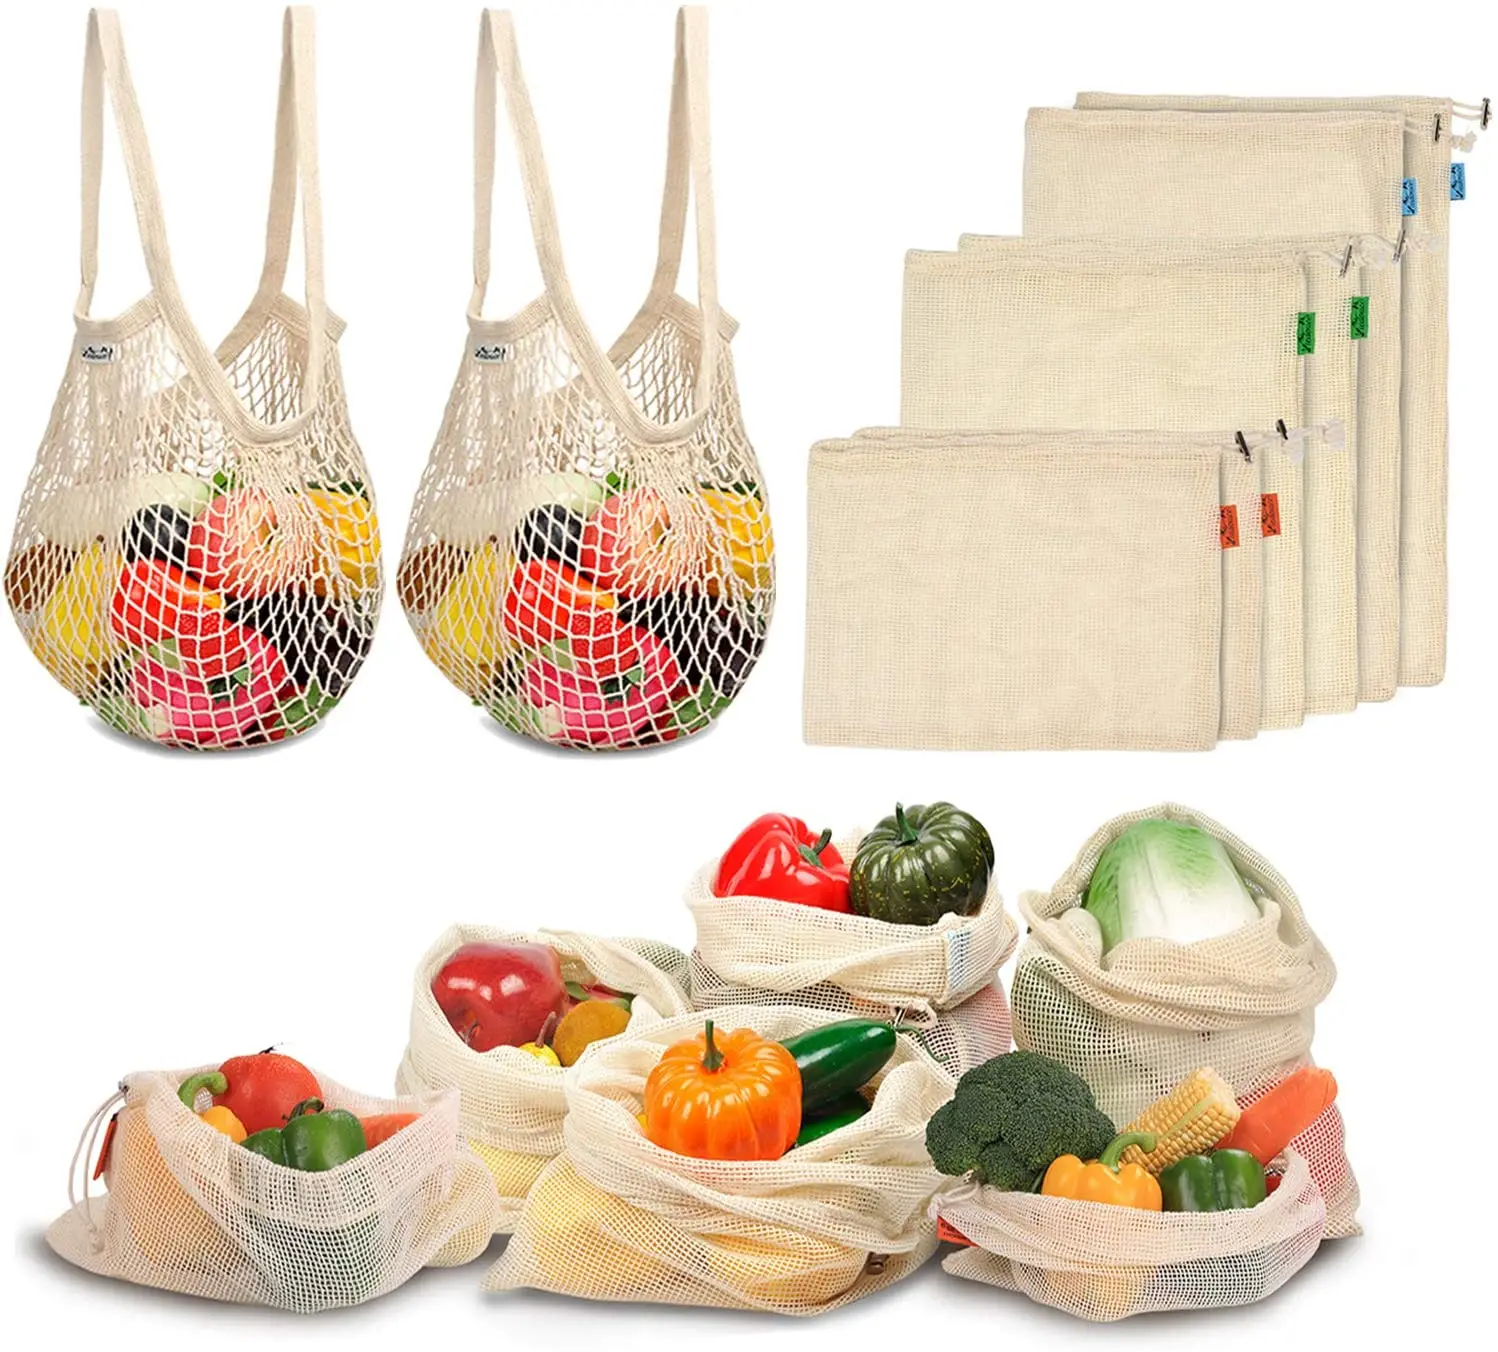 Produce Bags Mesh Organic Biodegradable Reusable Shopping Produce Bags